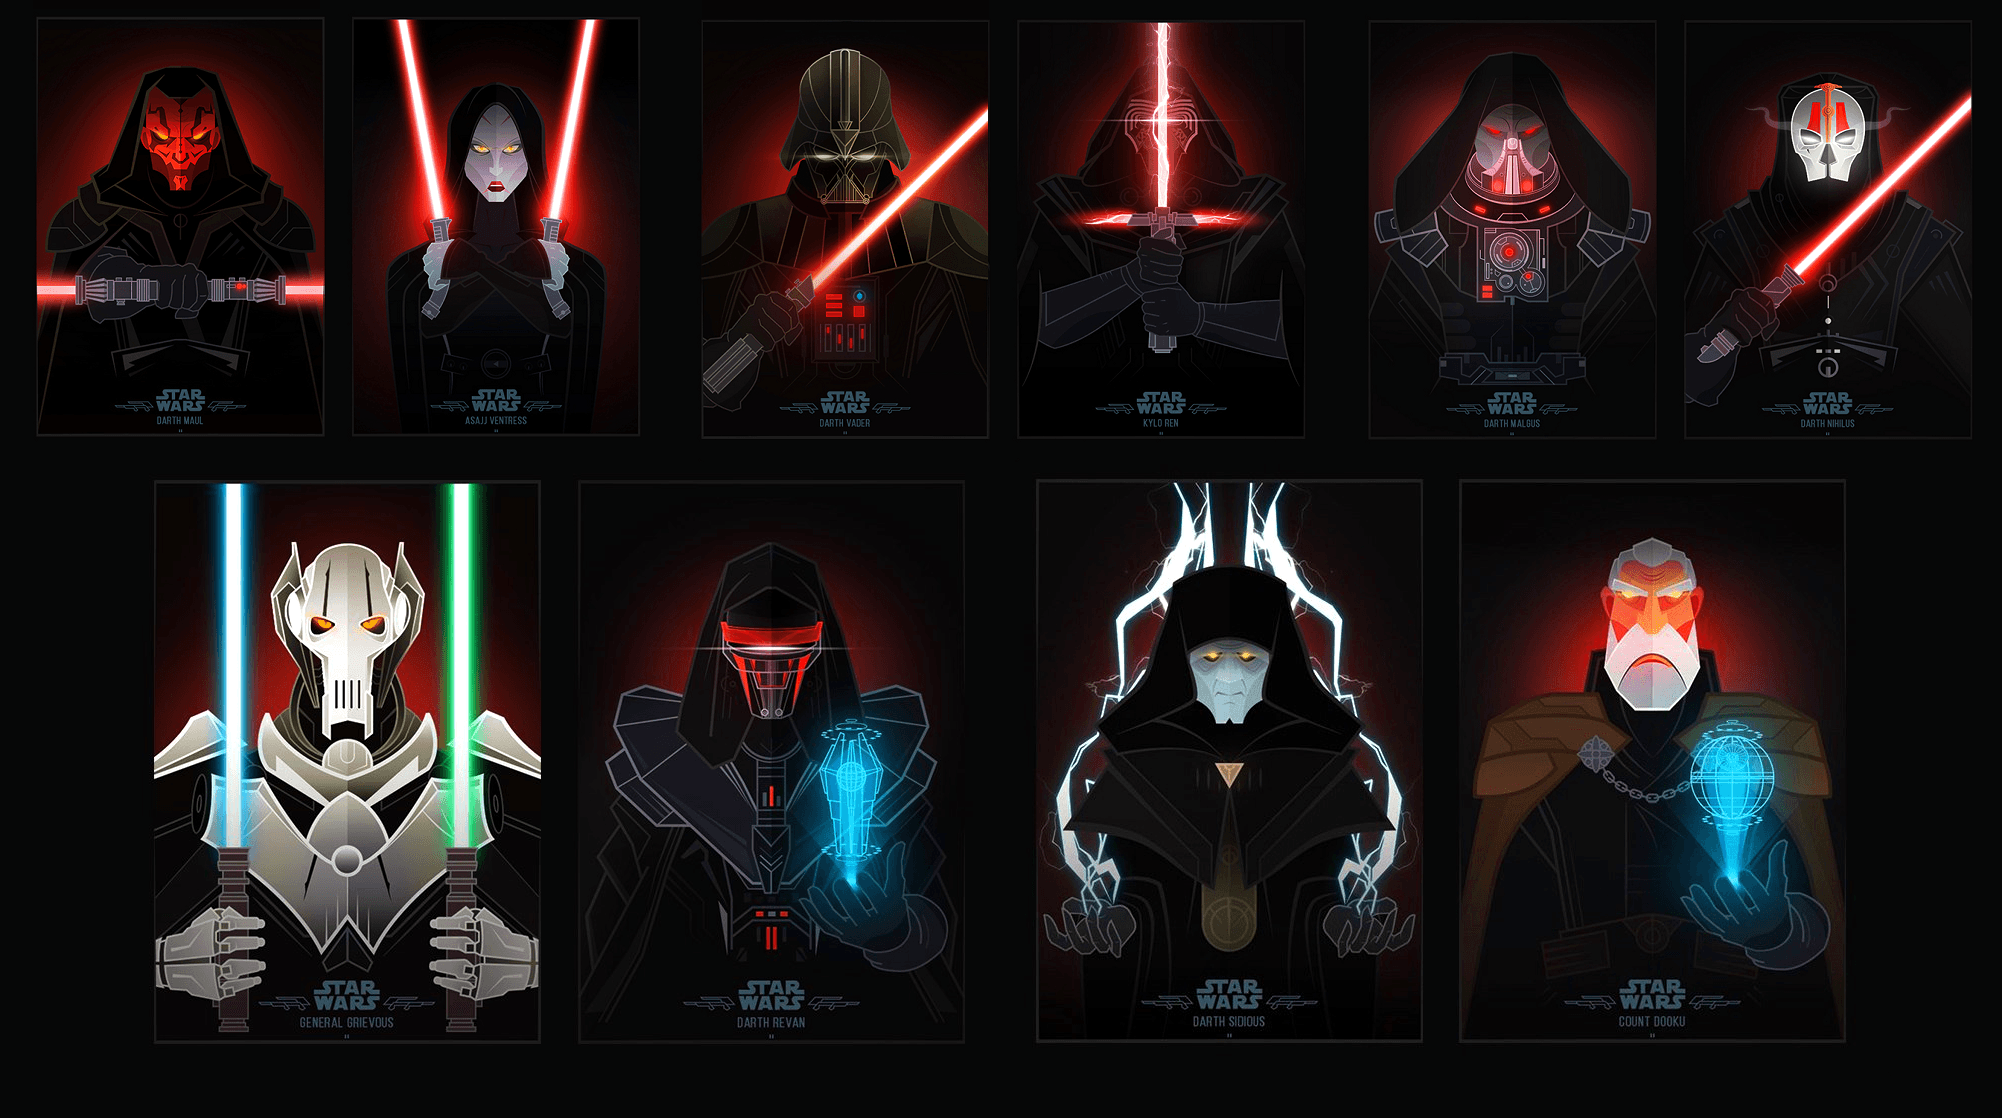 Star Wars Sith Wallpaper